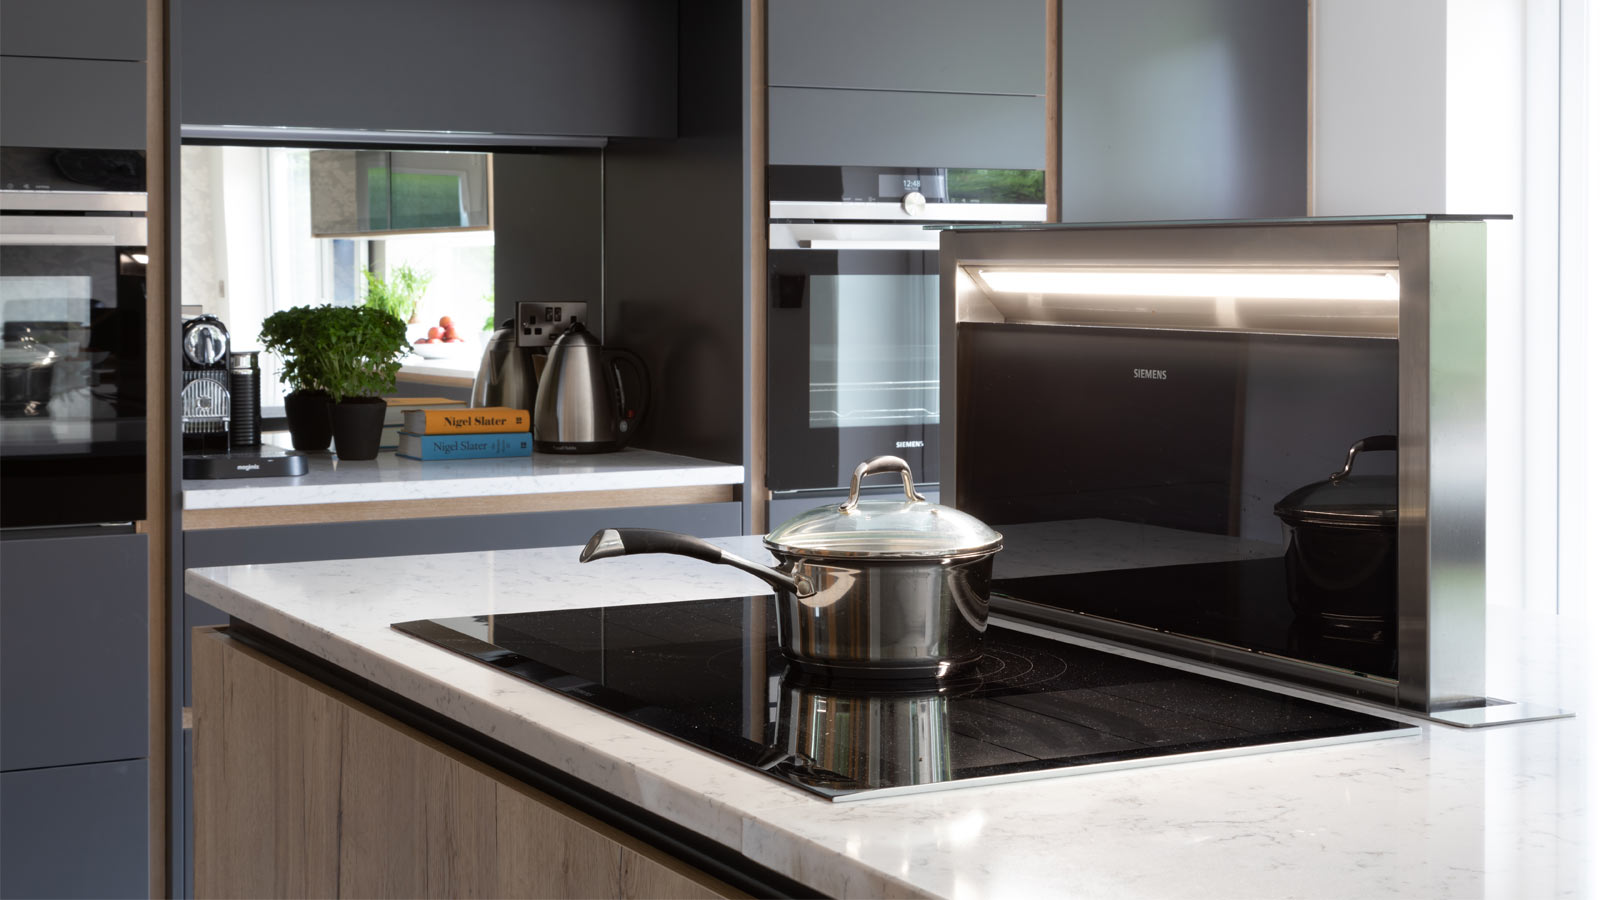 A perfect modern kitchen showcasing neuro design best practices